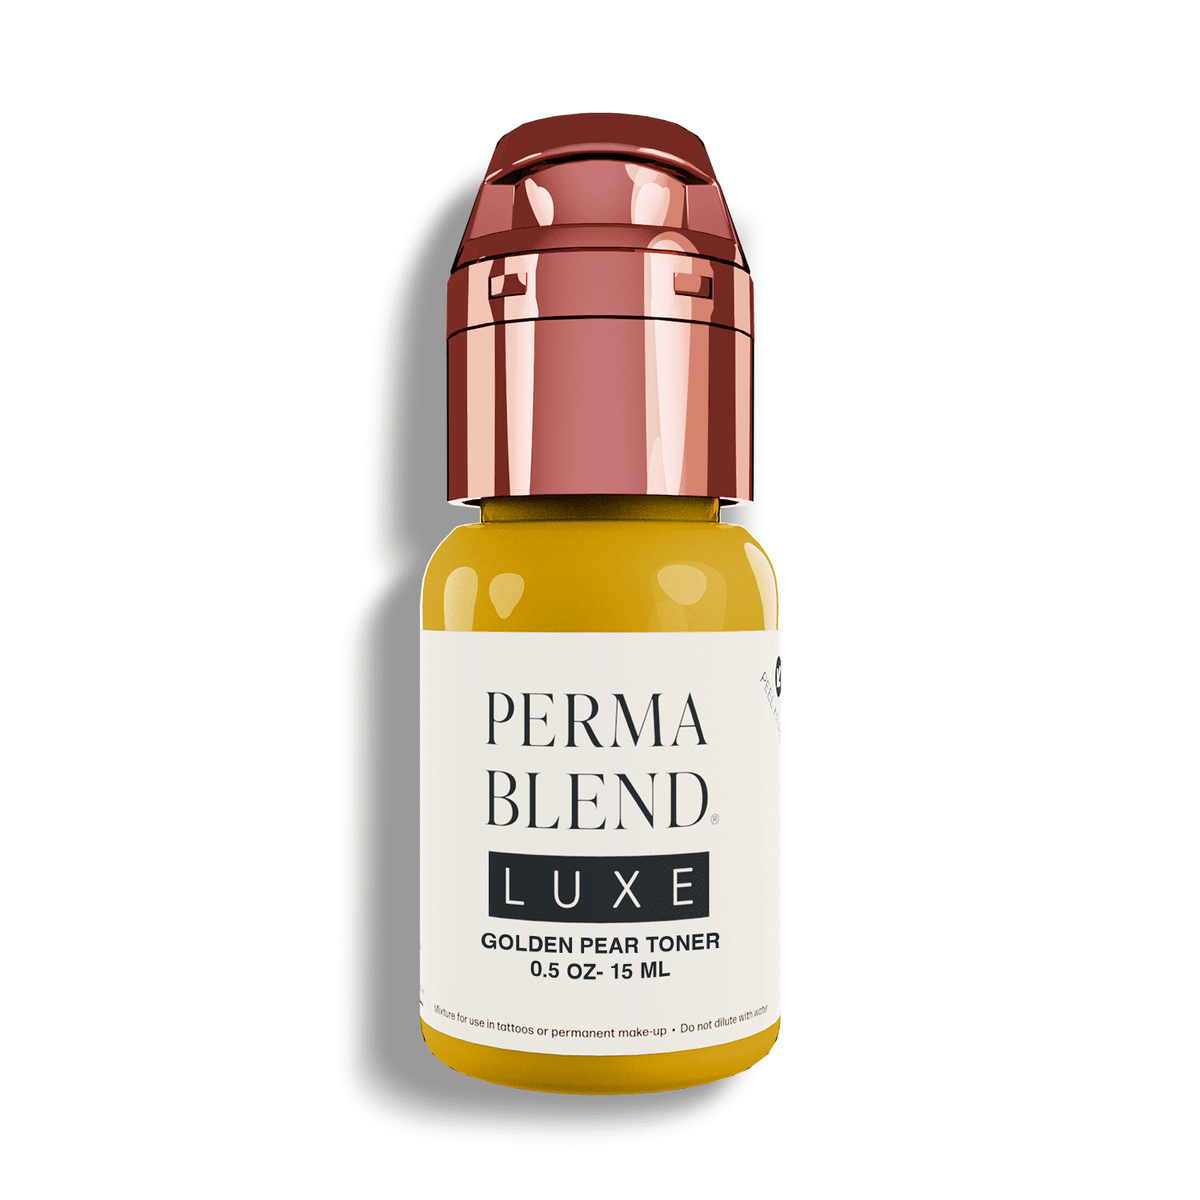 Perma Blend Luxe Golden Pear Toner